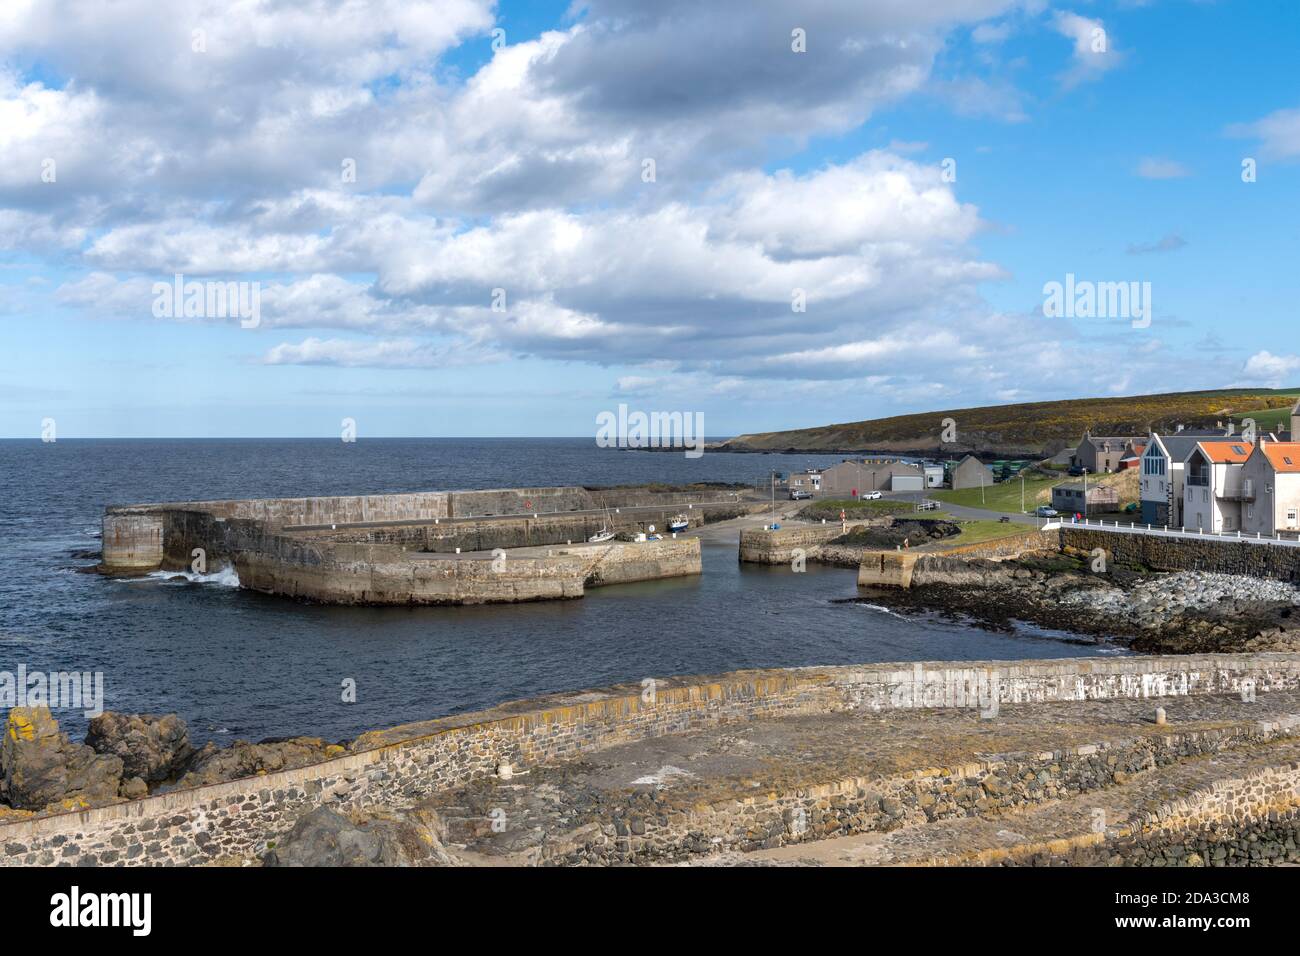 Landscape view of the idyllic fishing village of Portsoy, Aberdeenshire, Scotland, UK Stock Photo